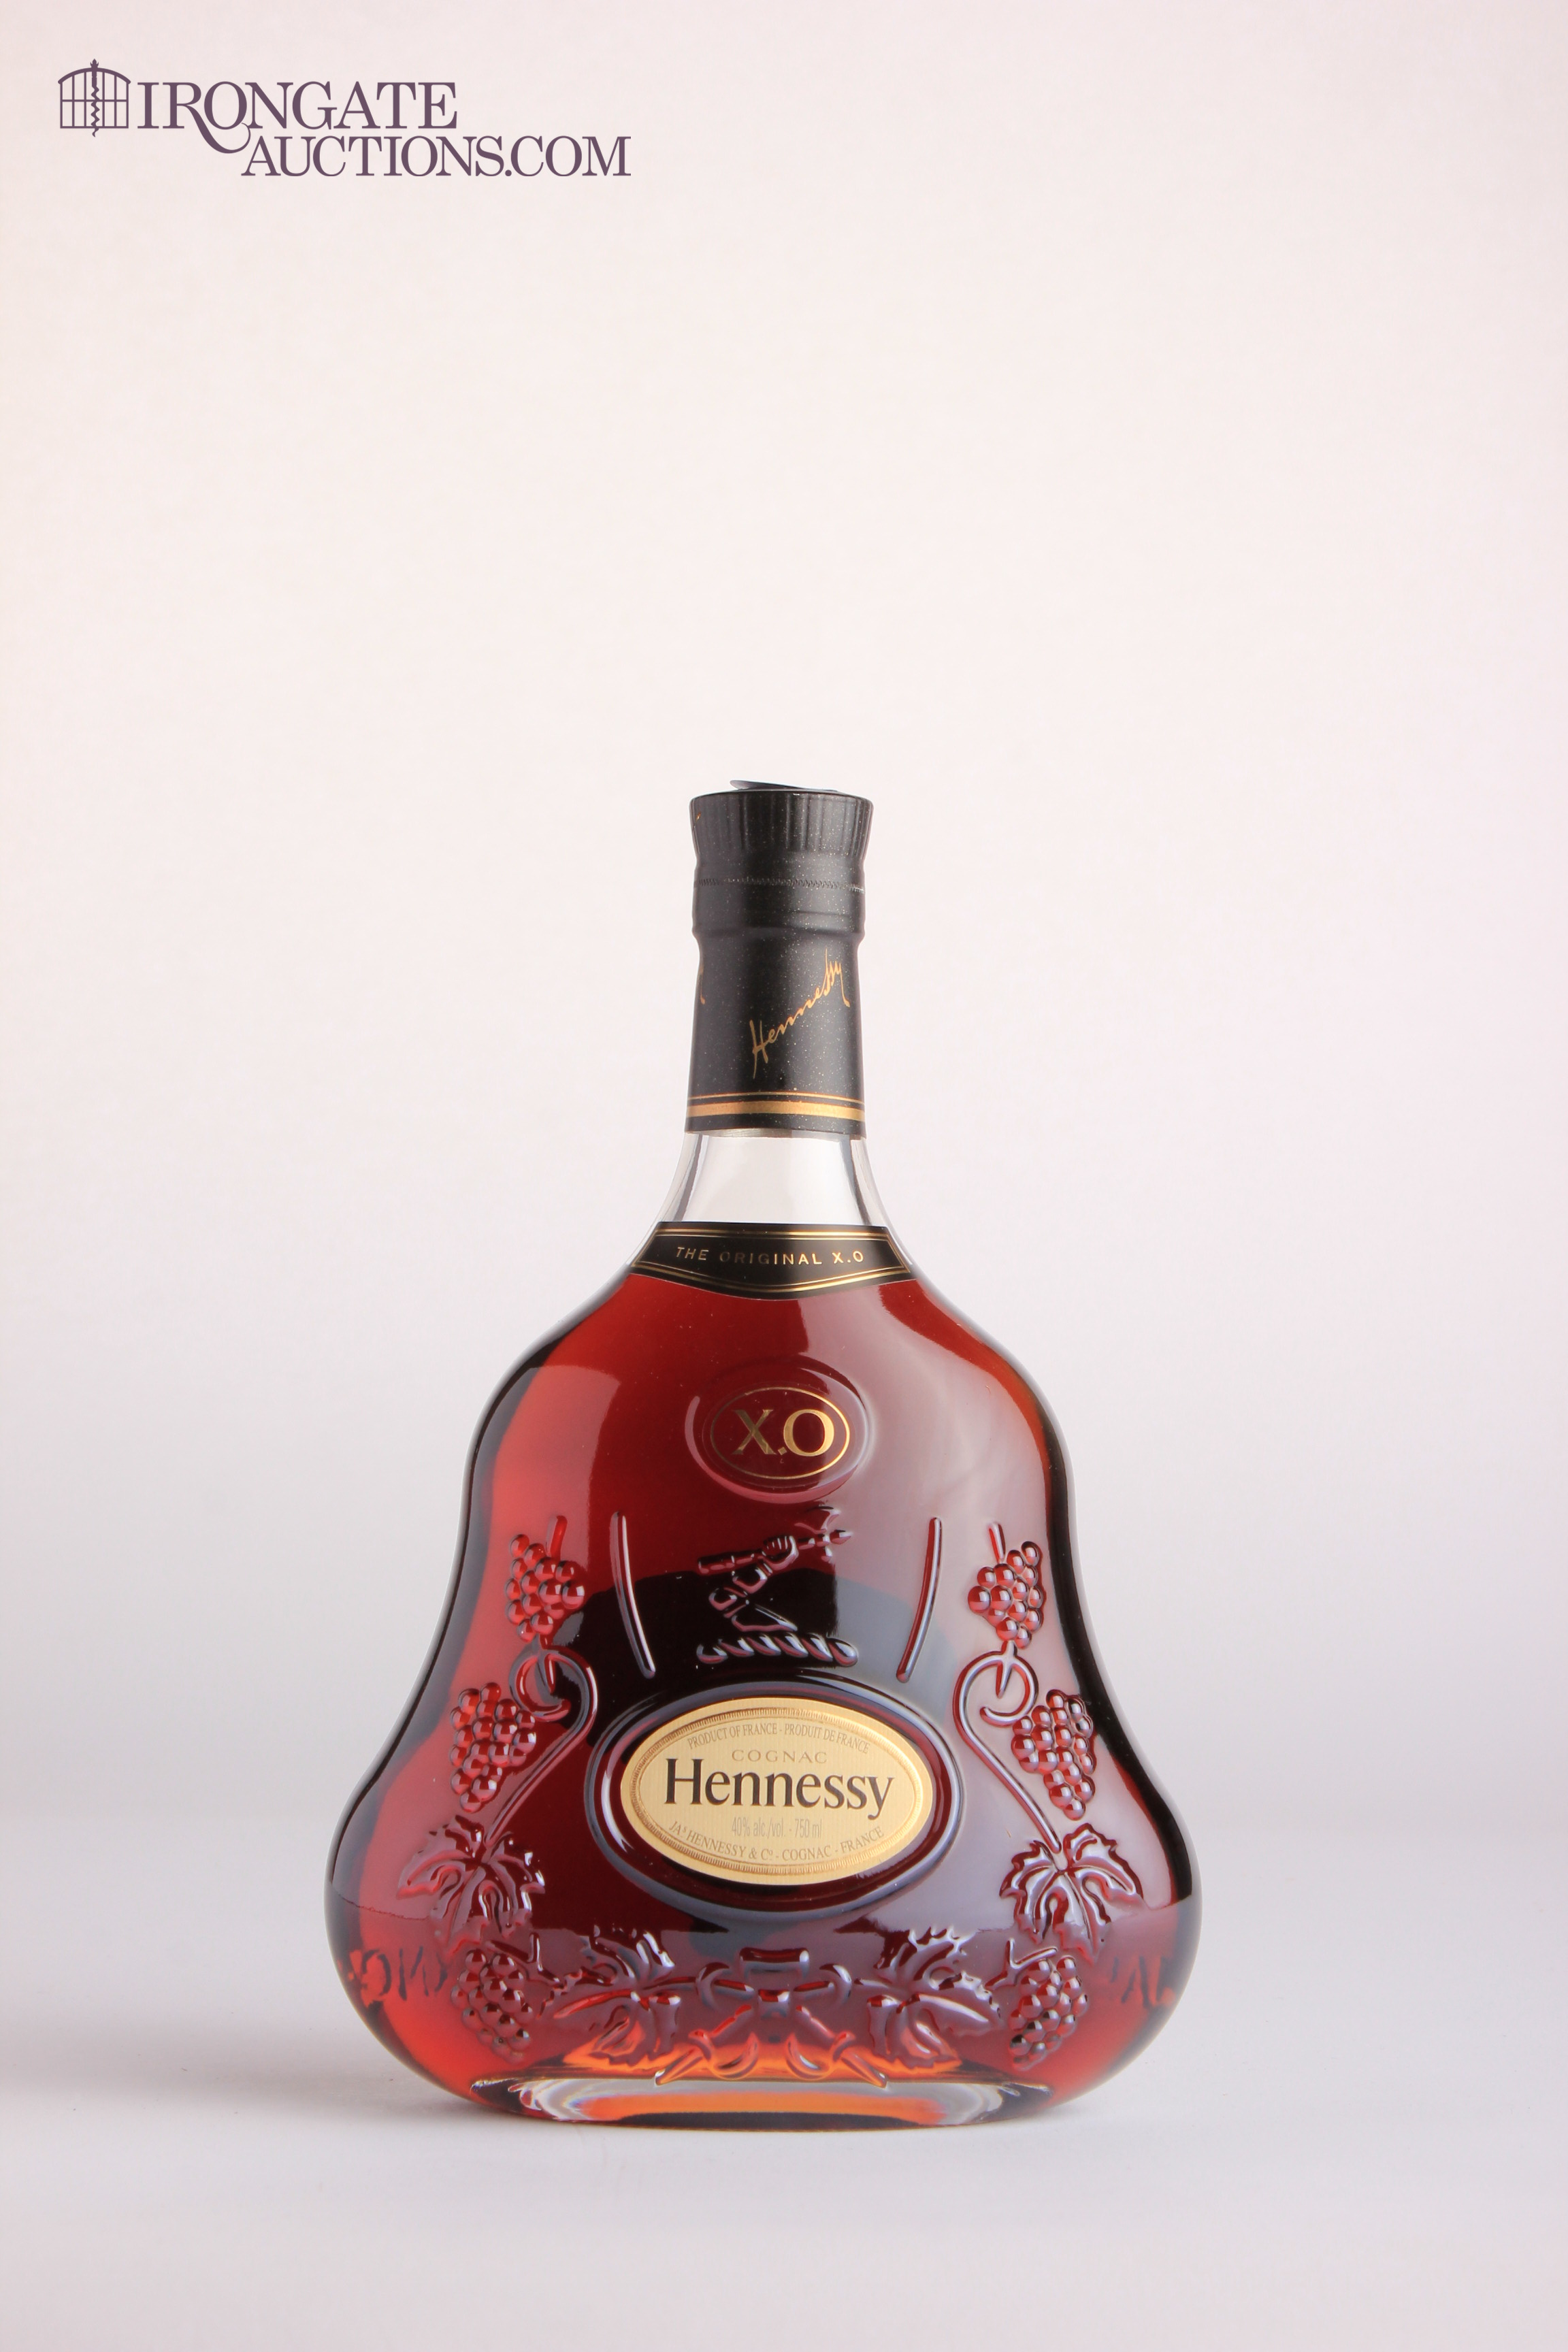 Hennessy XO Extra Old Cognac  Cognac   ml   1 bottles   Iron